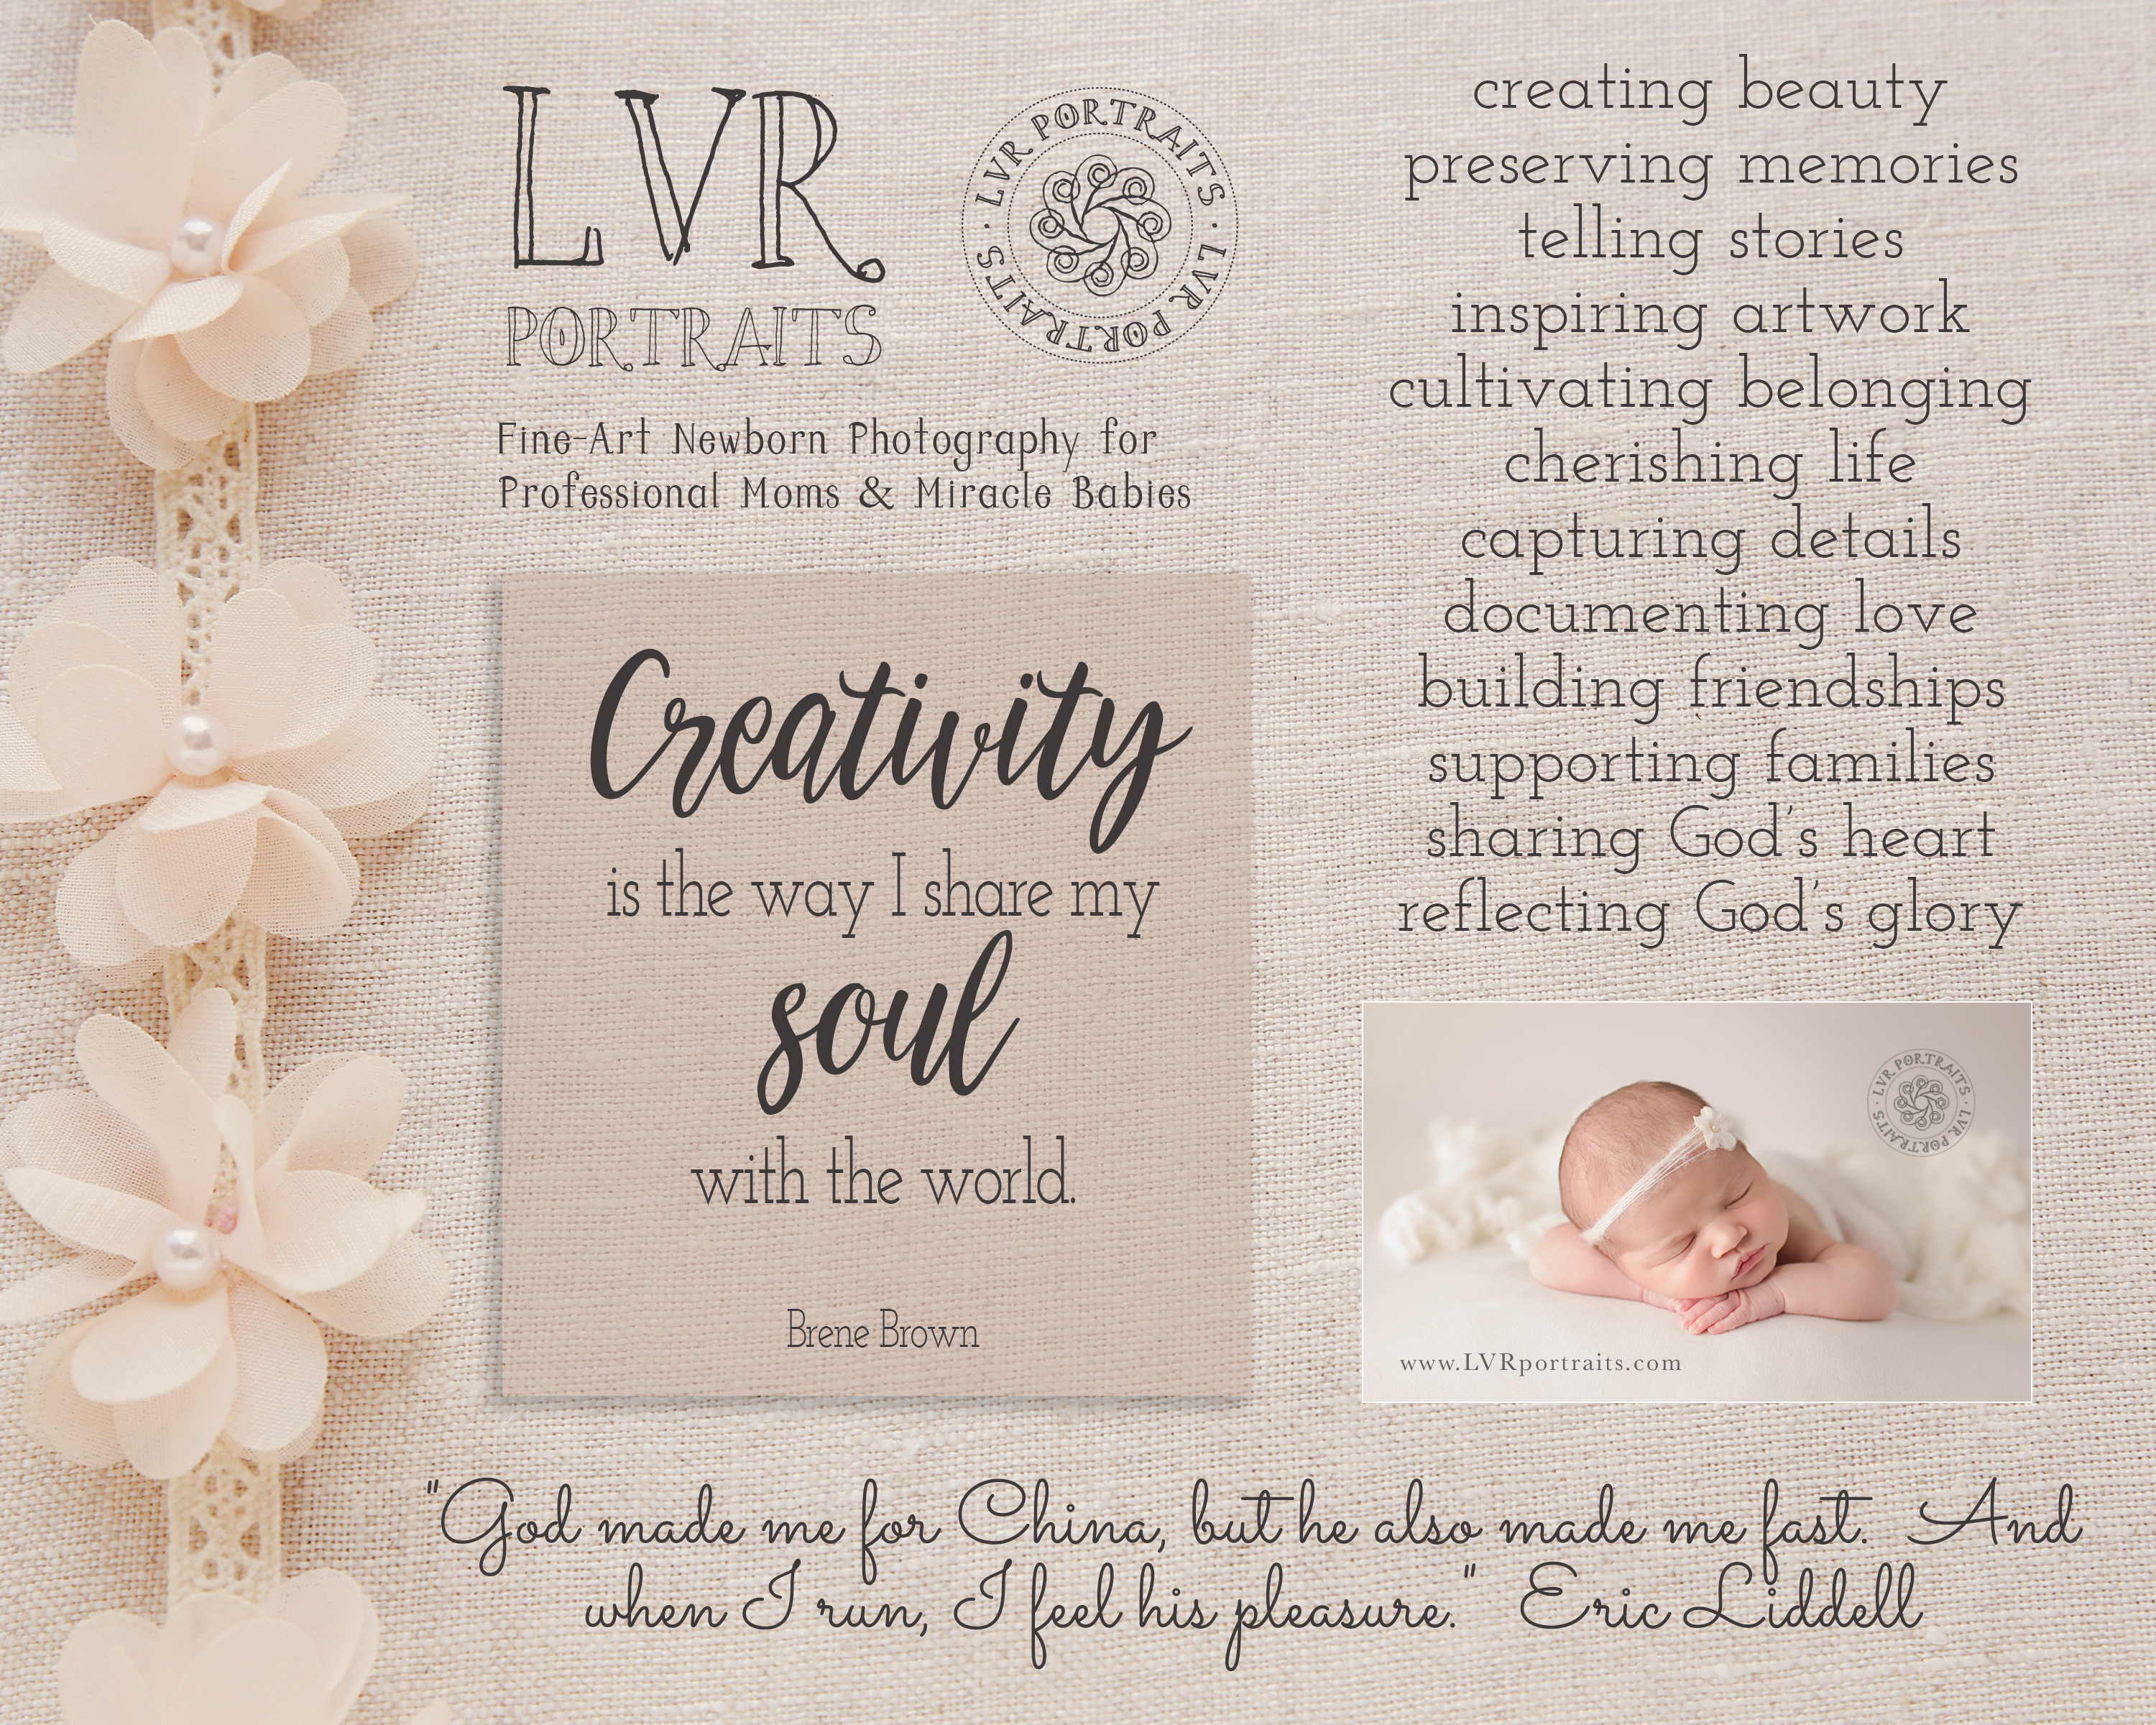 Vision Board, Newborn photography, LVR Portraits